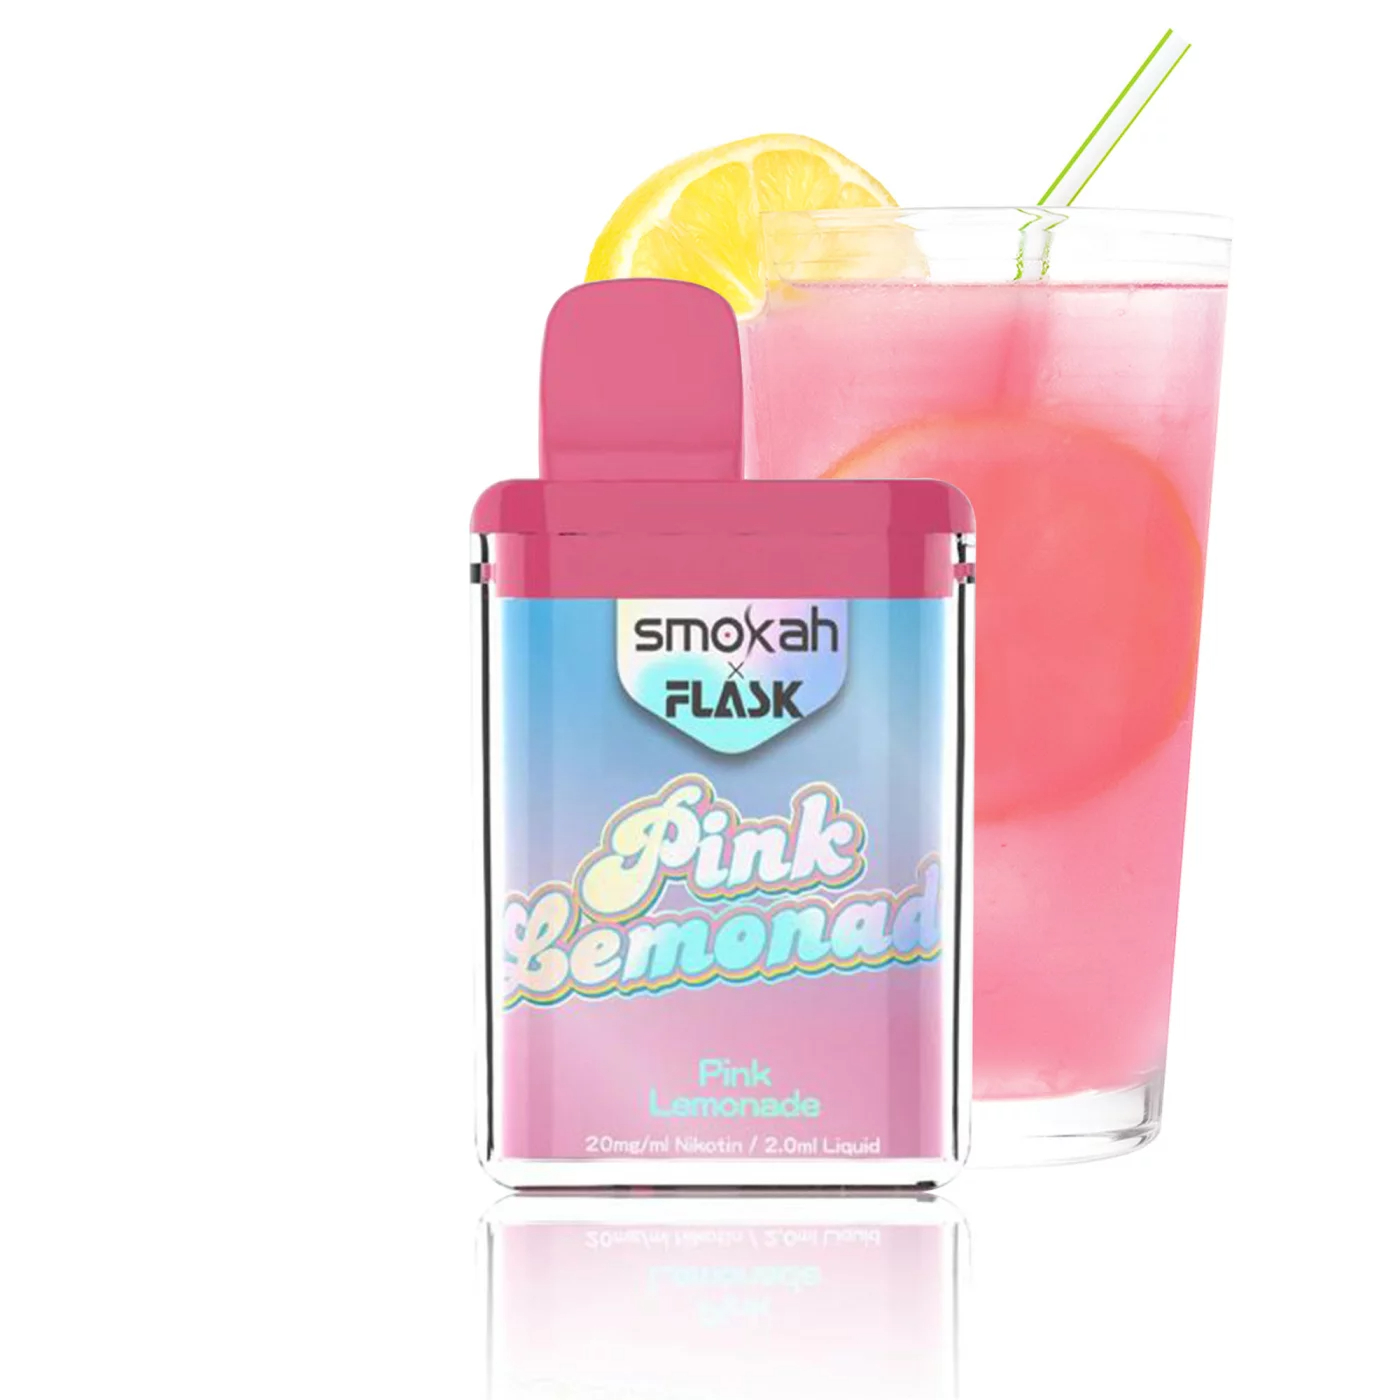 Smokah x Flask Pocket - Einweg E-Shisha - Pink Lemonade 2% Nikotin